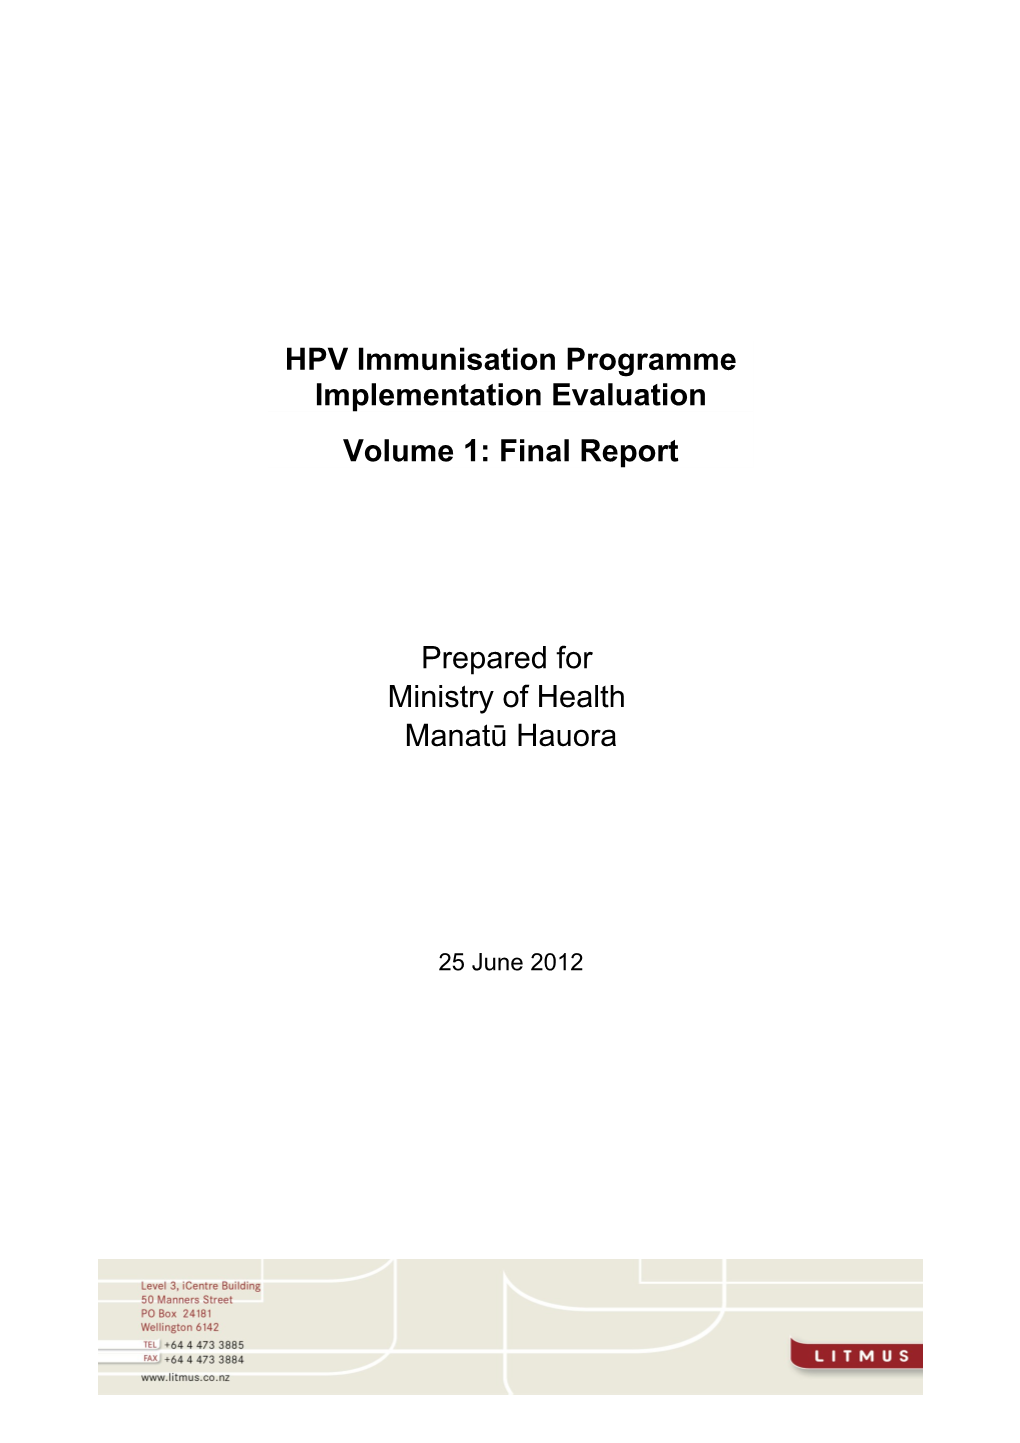 HPV Immunisation Programme Implementation Evaluation